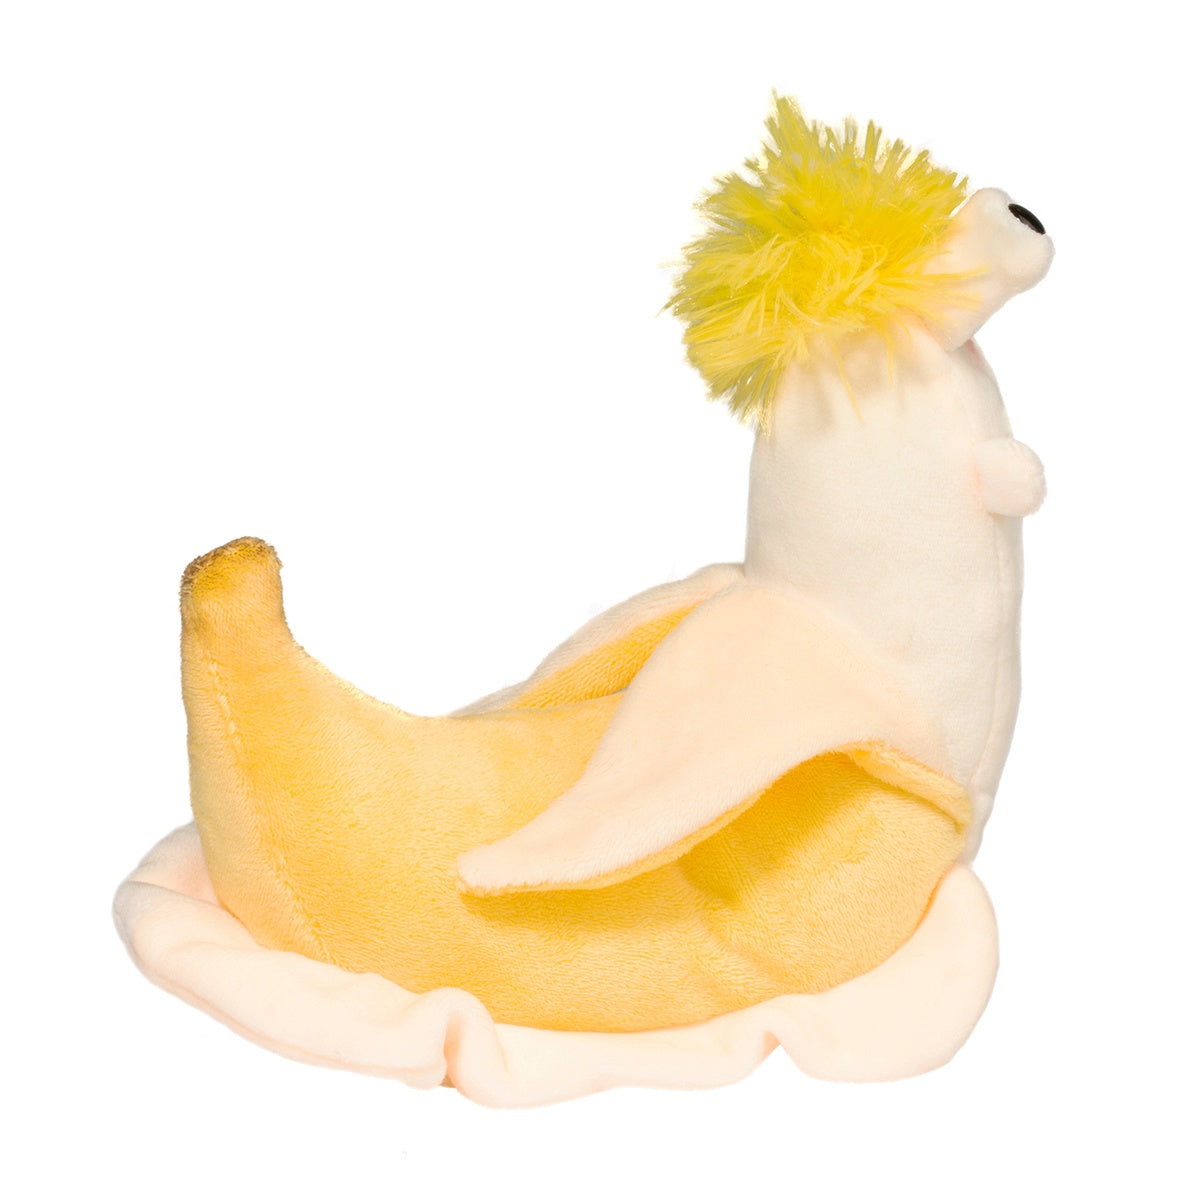 Vinnie Banana Slug    